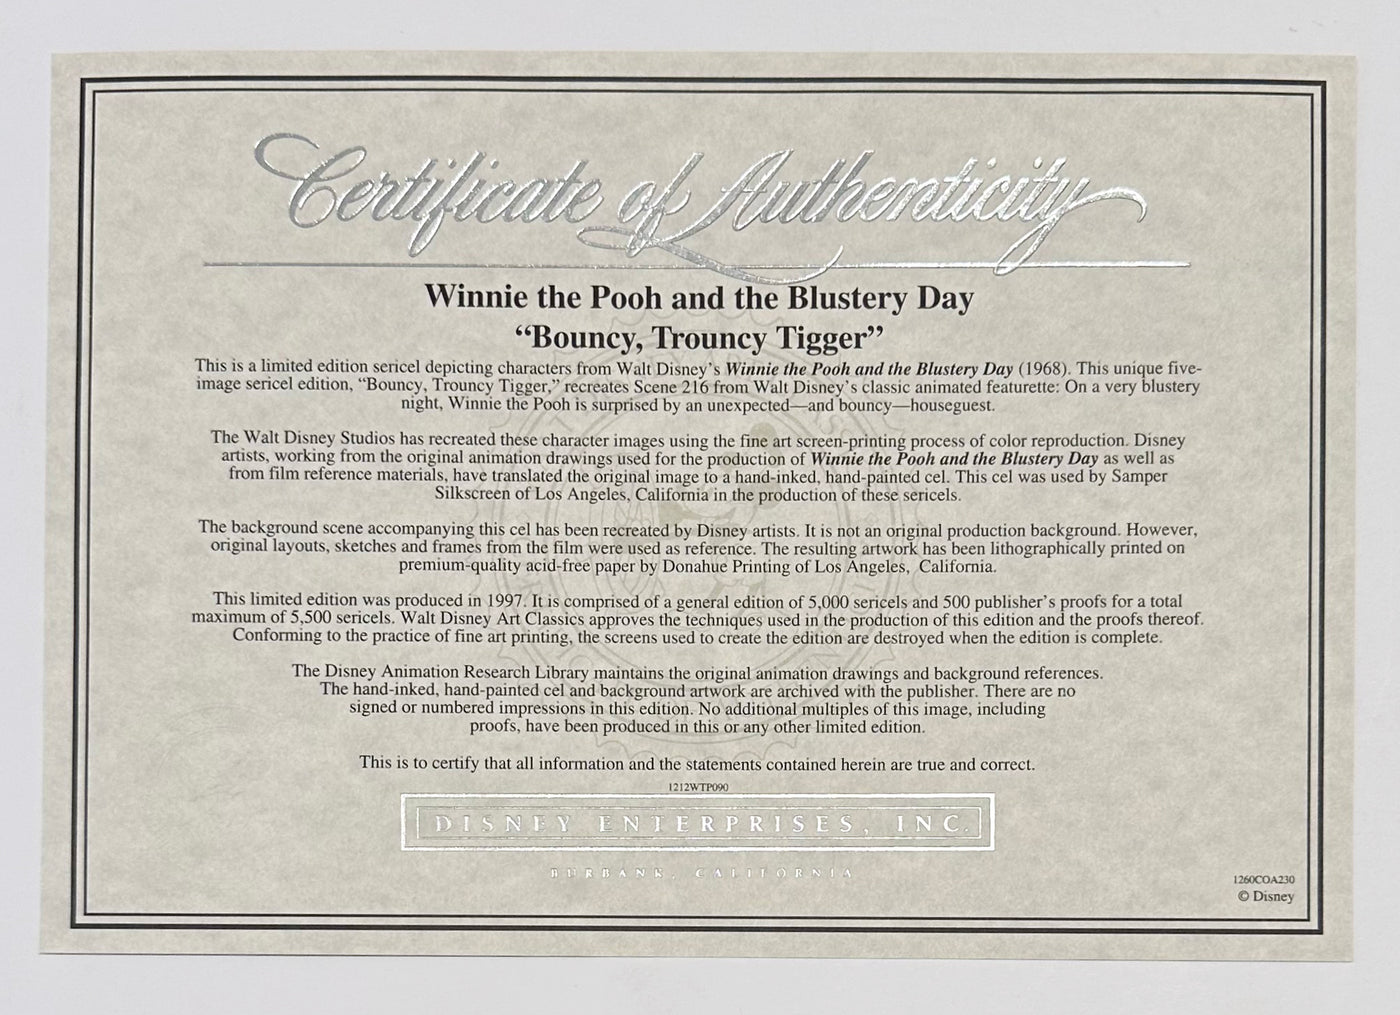 Original Walt Disney Limited Edition Sericel "Bouncy, Trouncy Tigger"